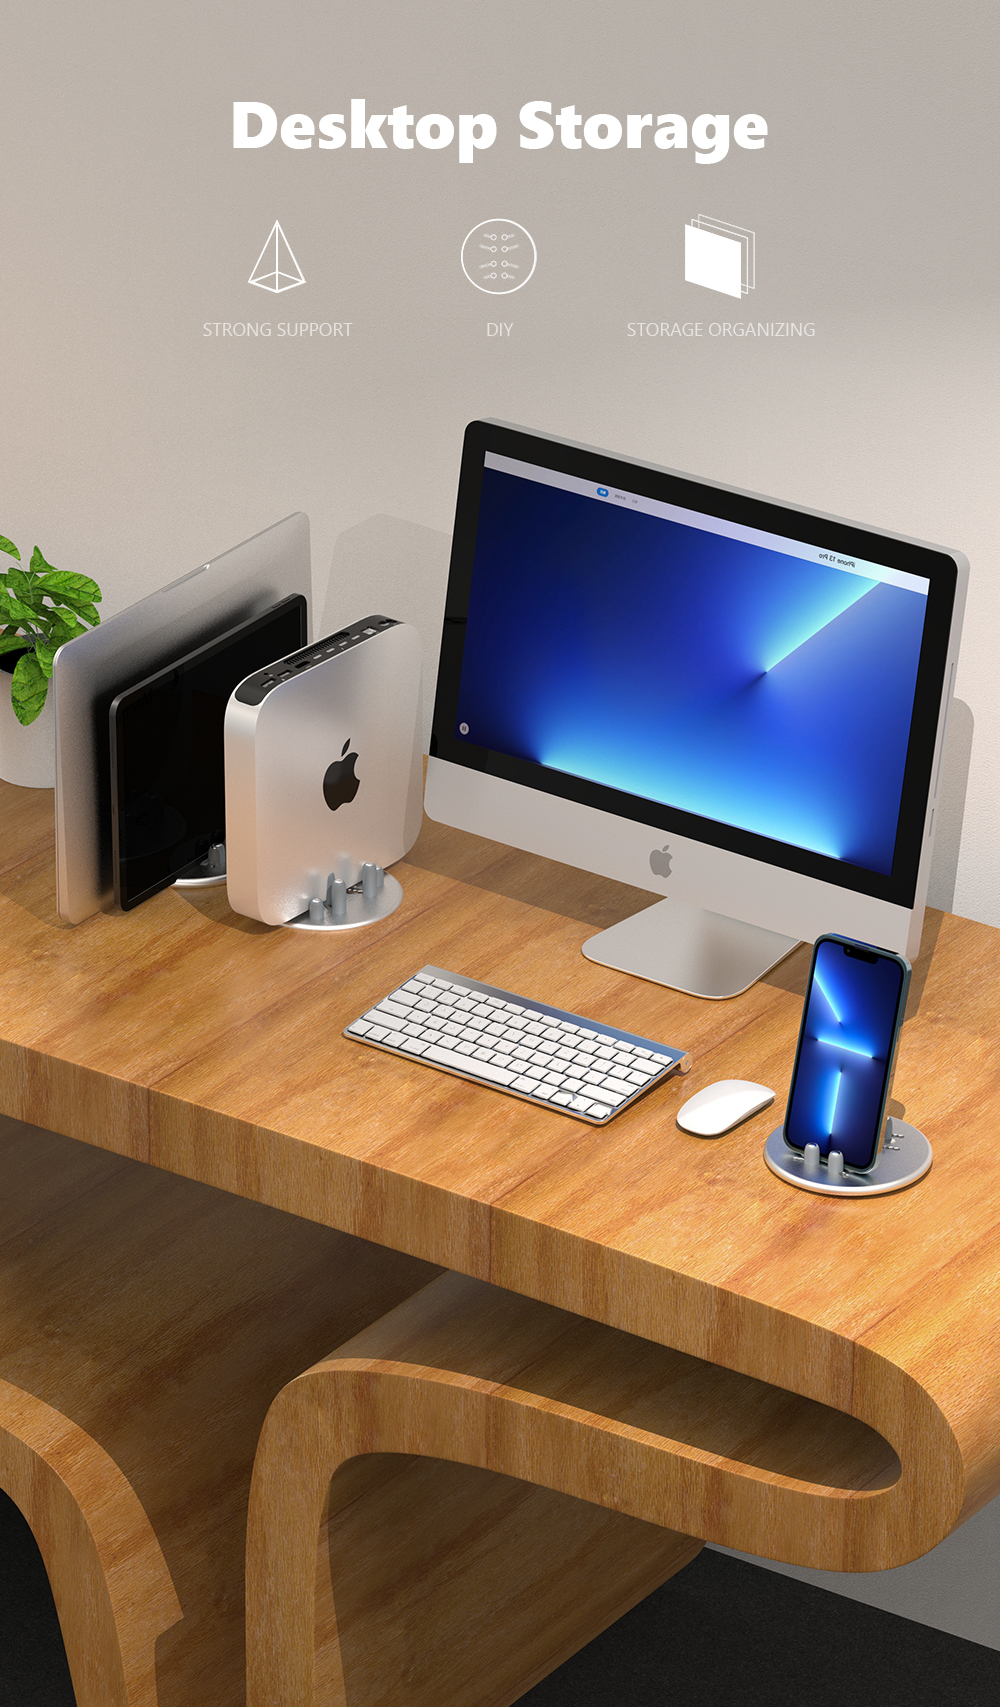 Desktop-Laptop-Stand-Adjustable-Vertical-Supplies-Portable-Accessories-Rack-Holder-Storage-Base-for--1968585-1